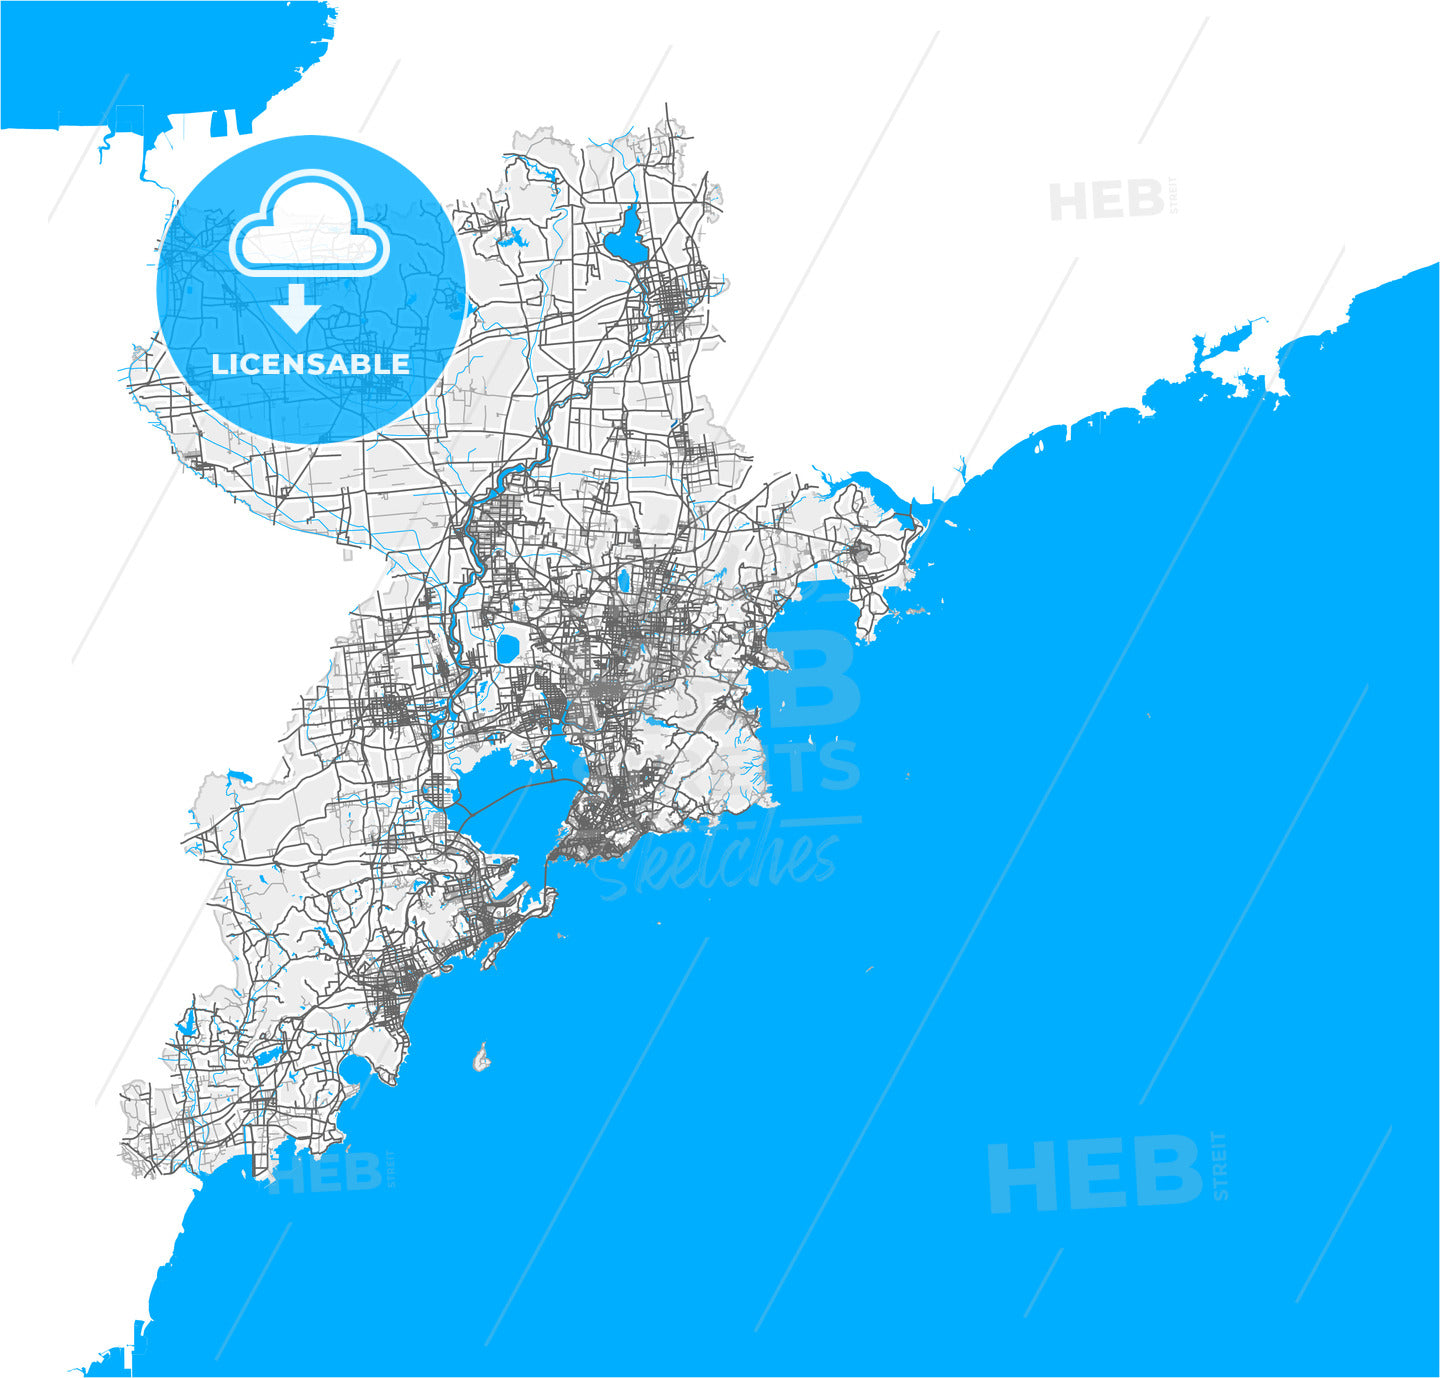 Qingdao, Shandong, China, high quality vector map